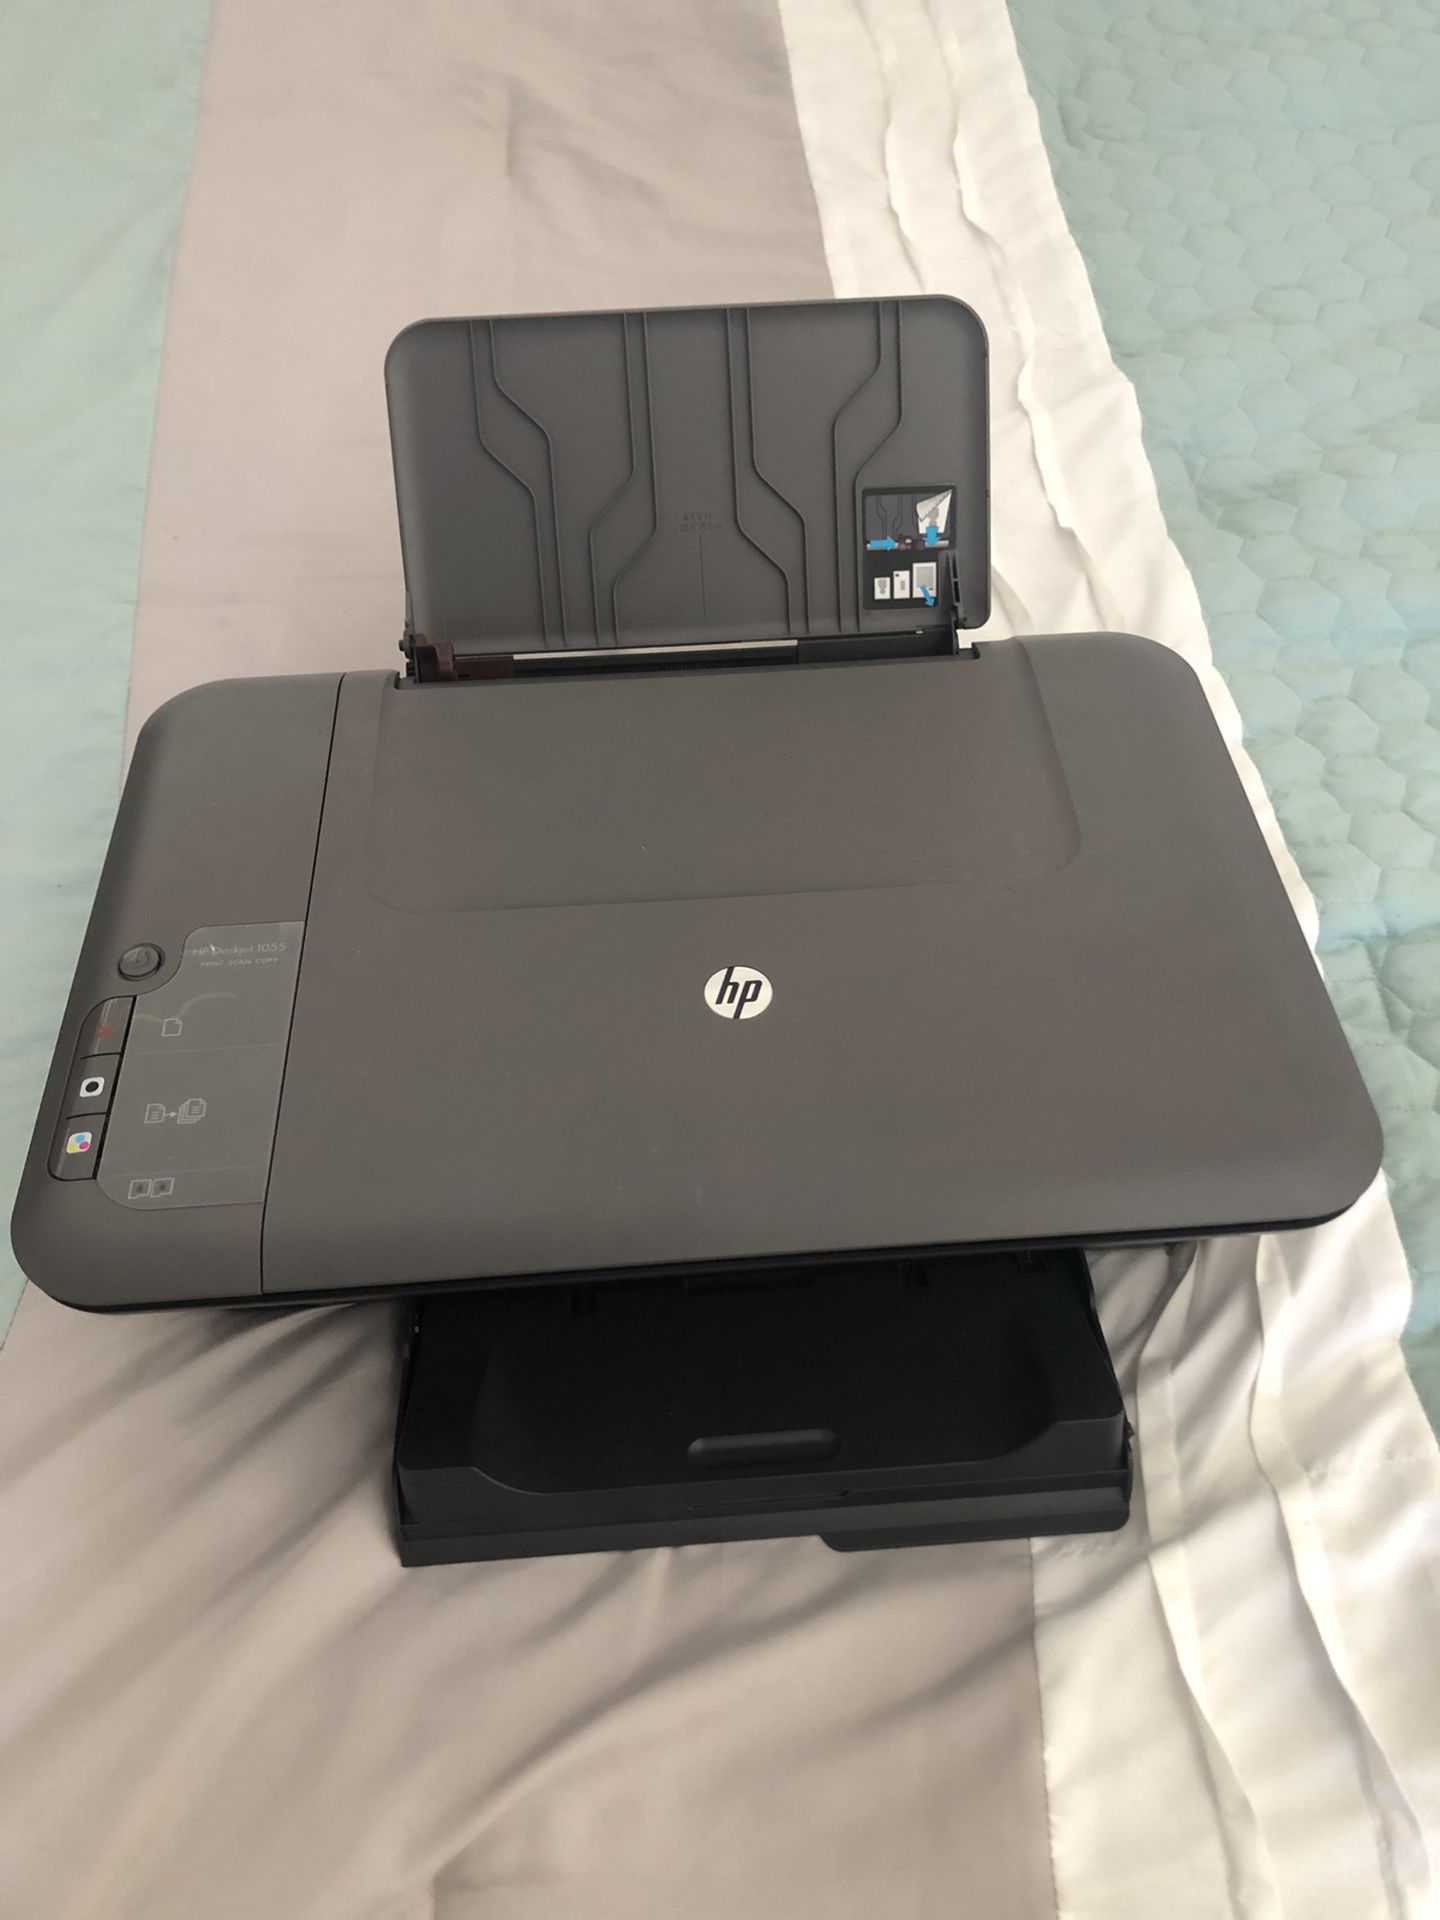 HP Deskjet 1055 Printer/scanner/copier